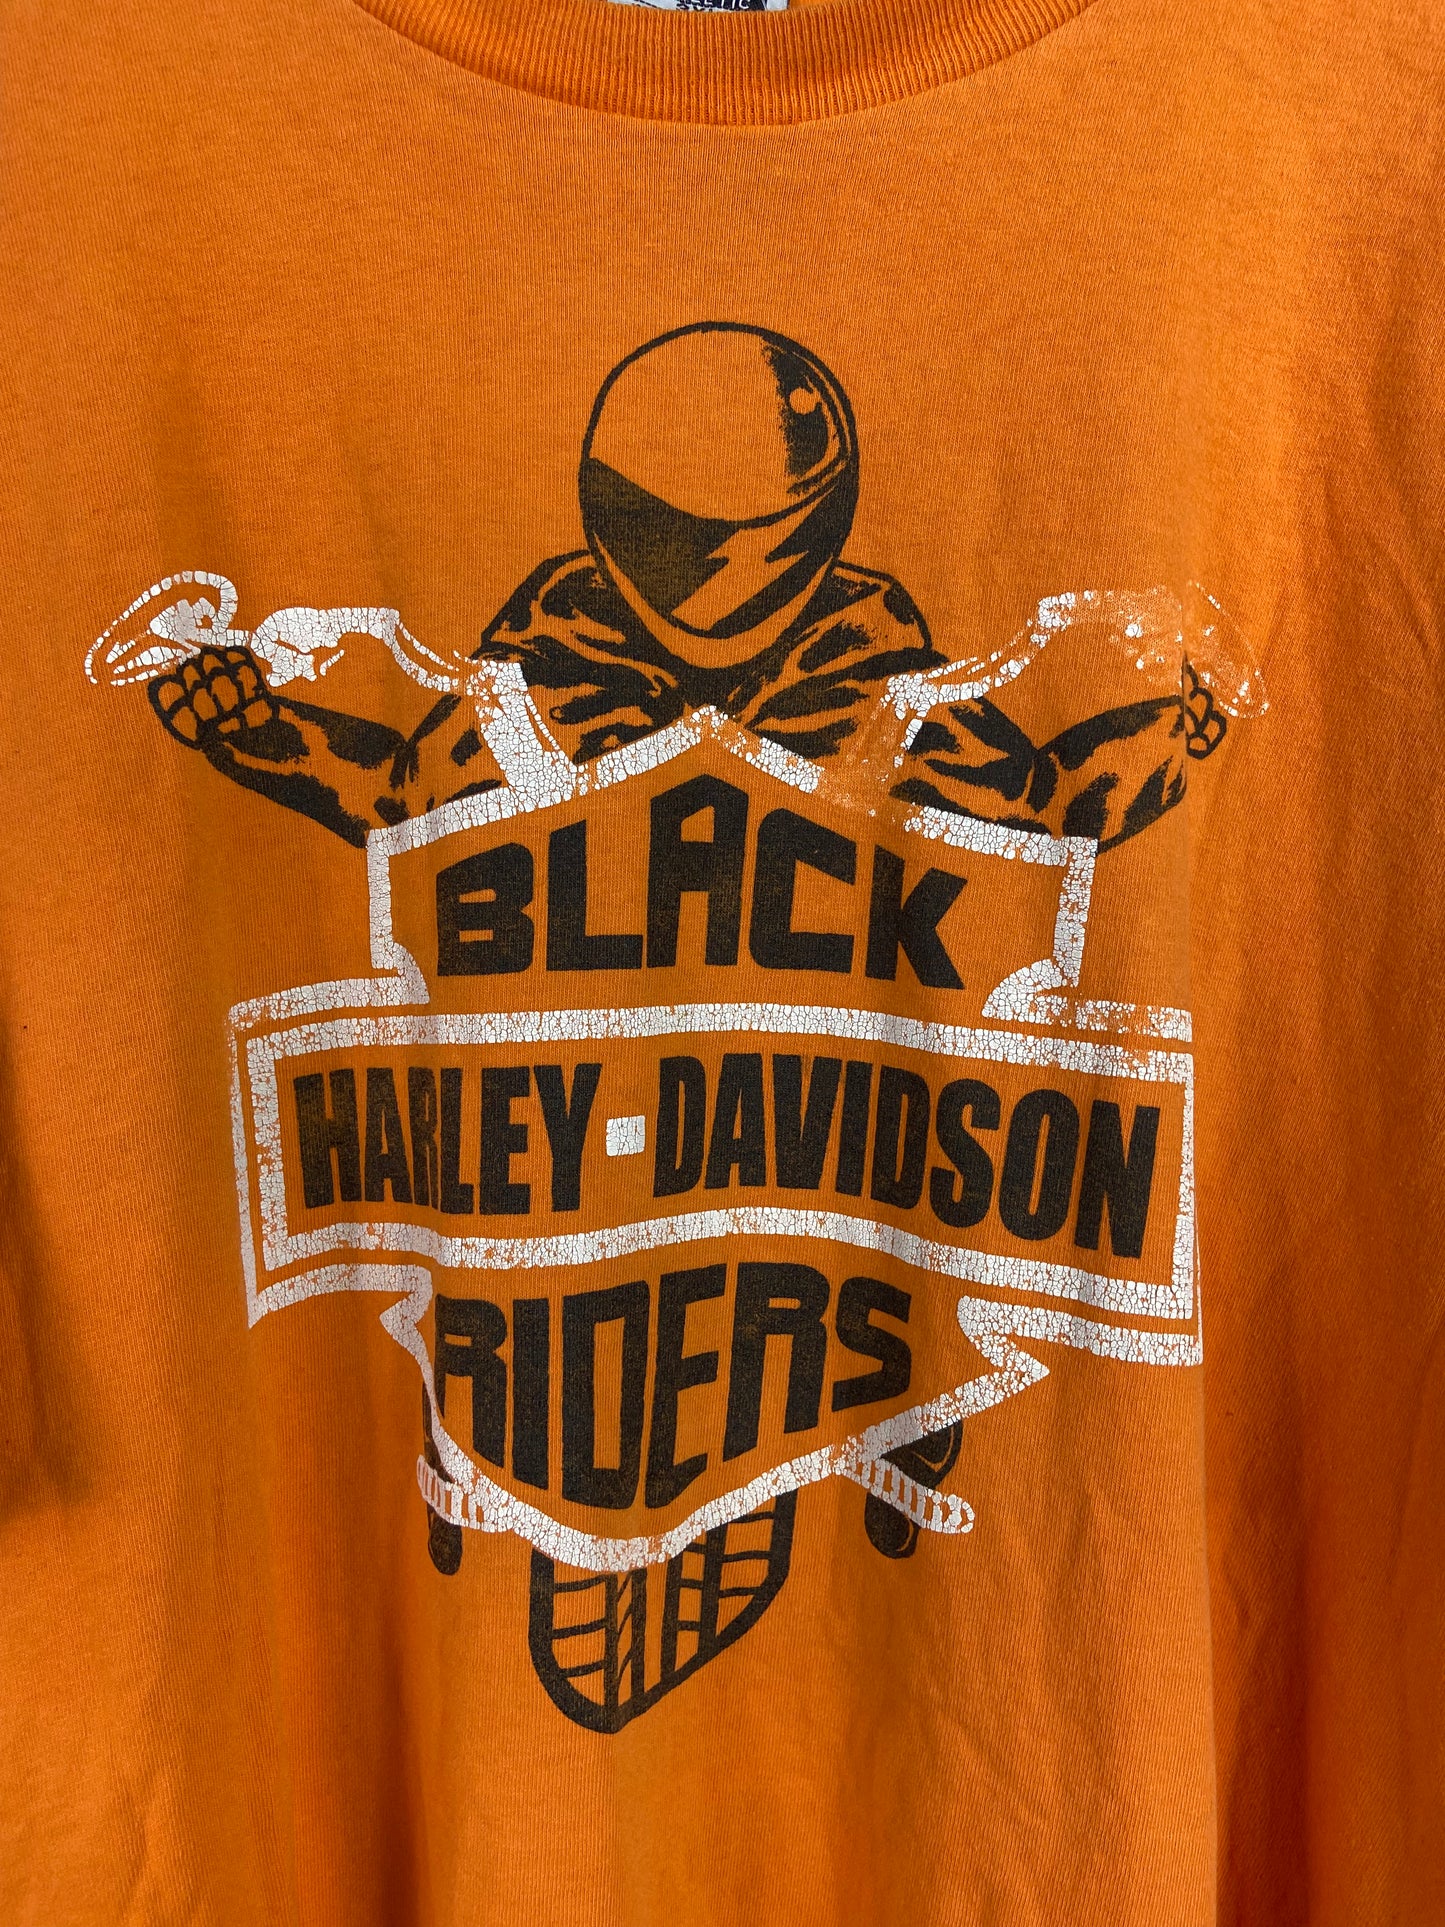 VTG Harley Davidson Black Riders Tee Sz 2XL/3XL